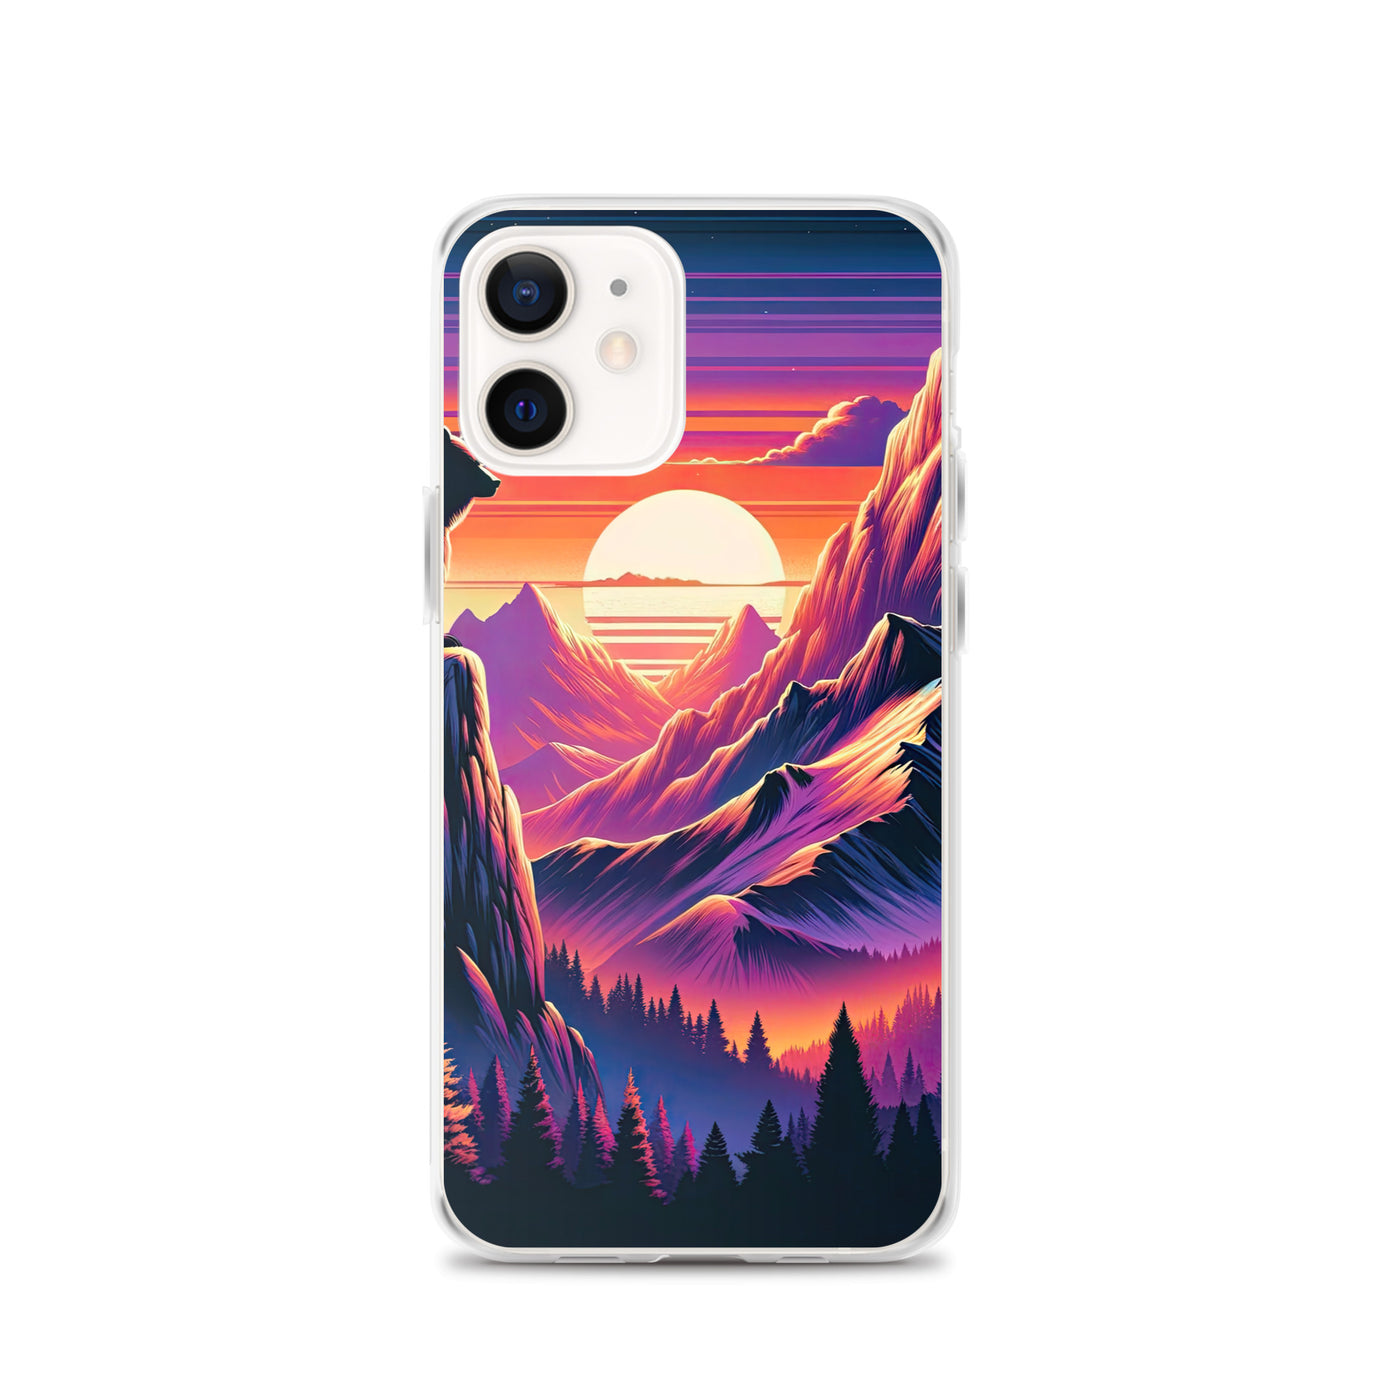 Alpen-Sonnenuntergang mit Bär auf Hügel, warmes Himmelsfarbenspiel - iPhone Schutzhülle (durchsichtig) camping xxx yyy zzz iPhone 12